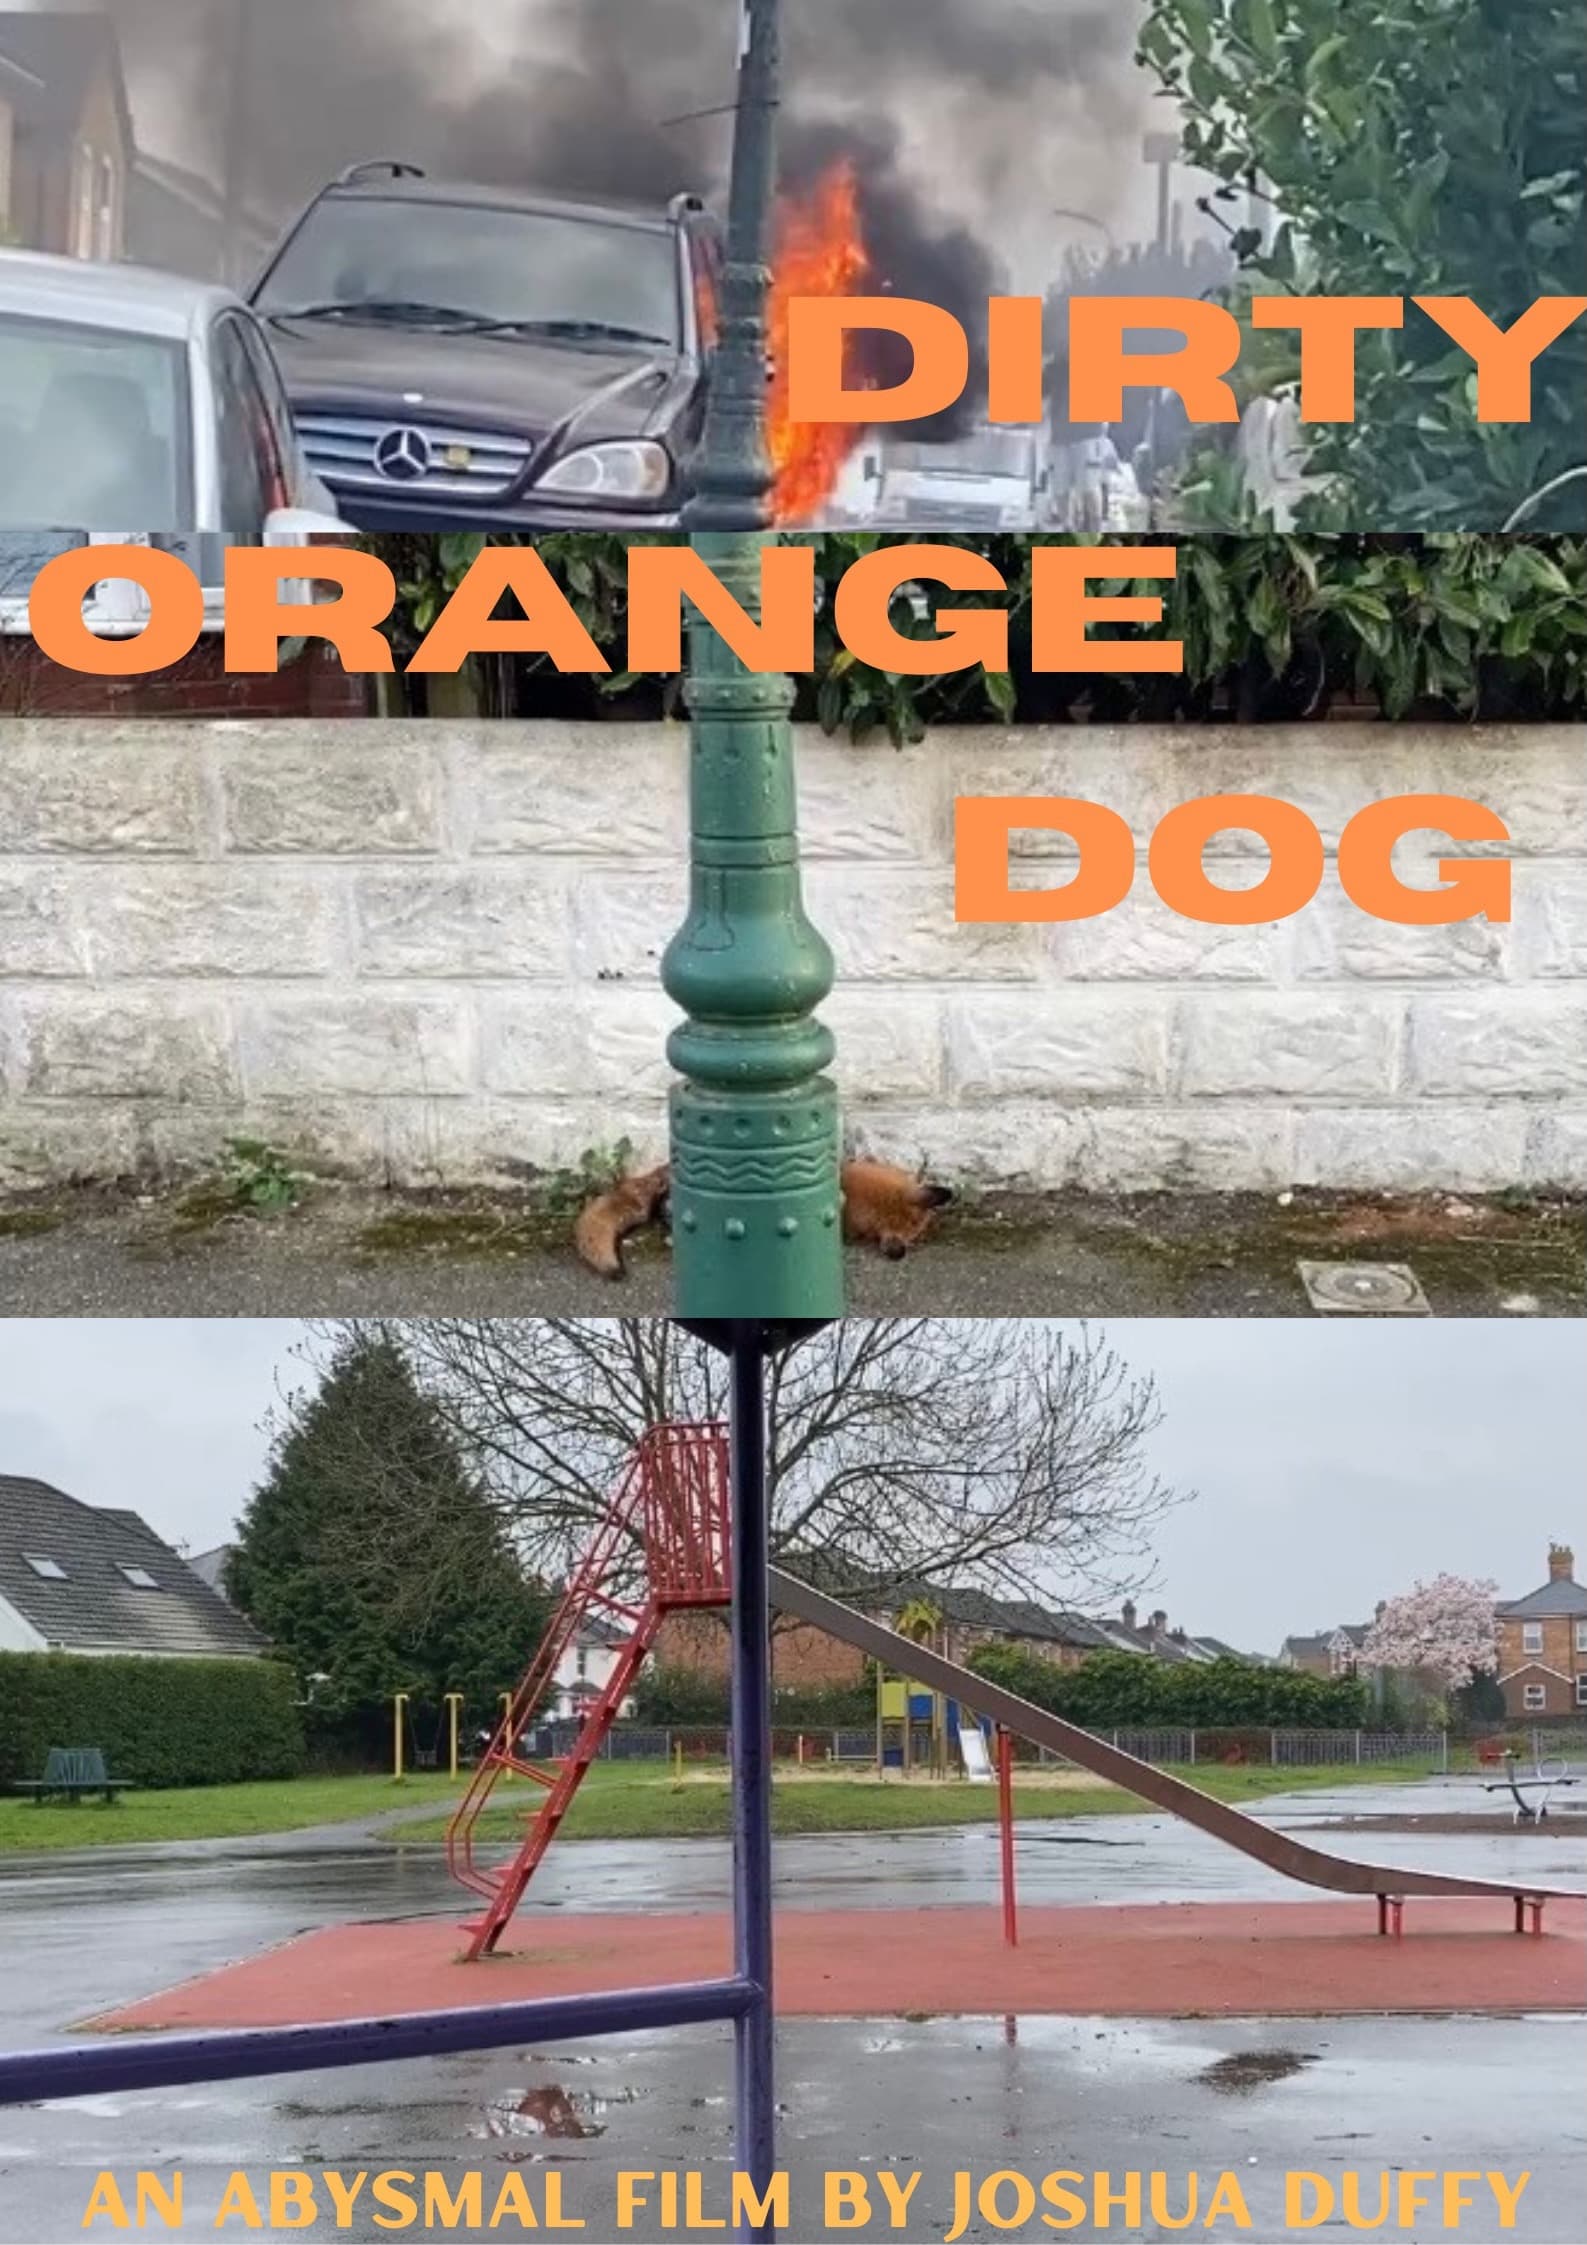 Dirty Orange doG